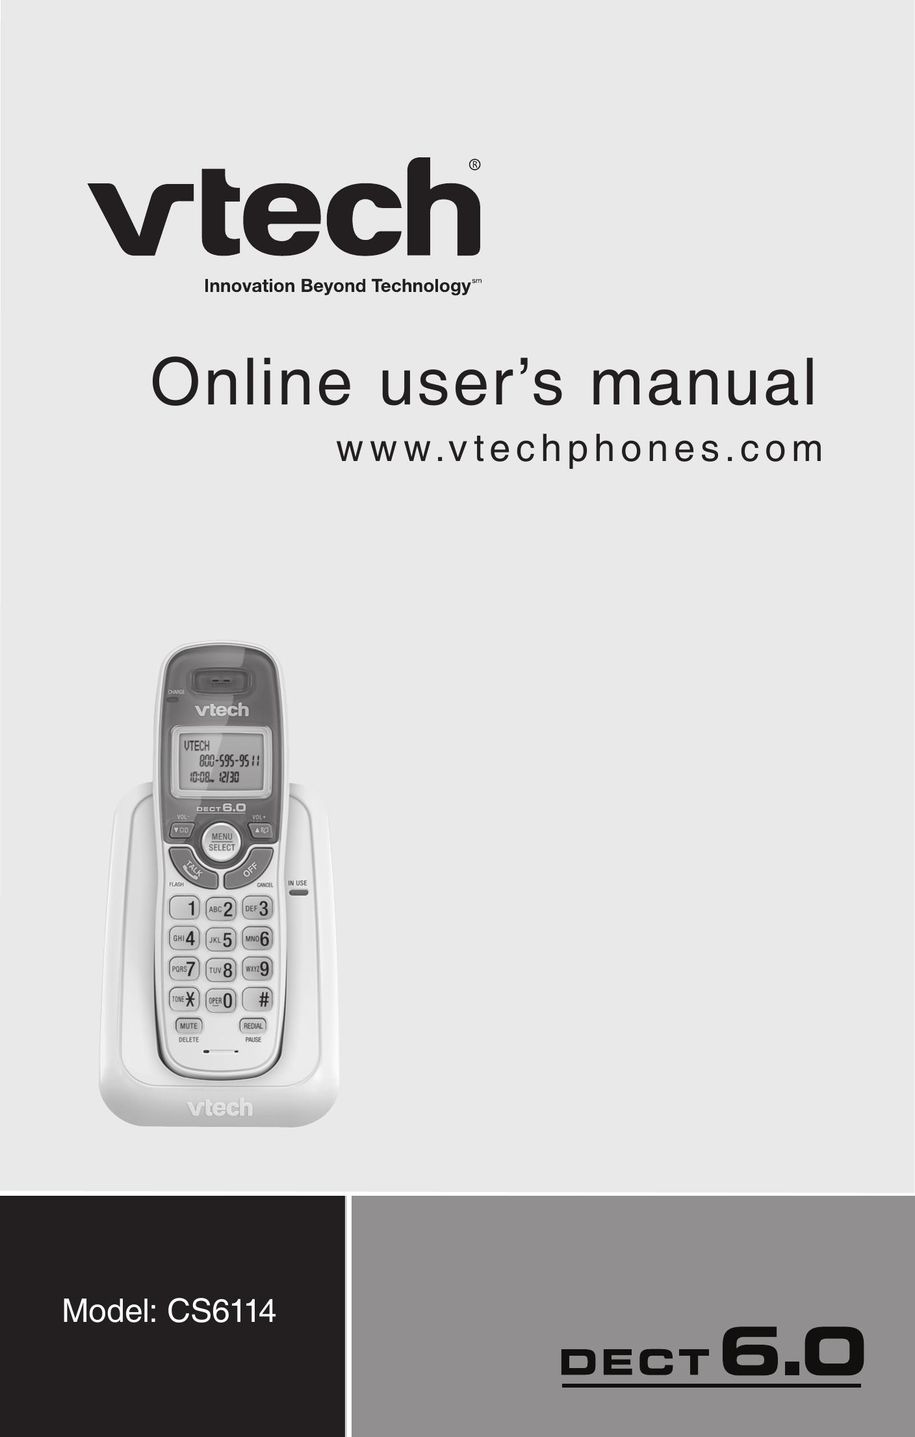 VTech CS6114 Cordless Telephone User Manual